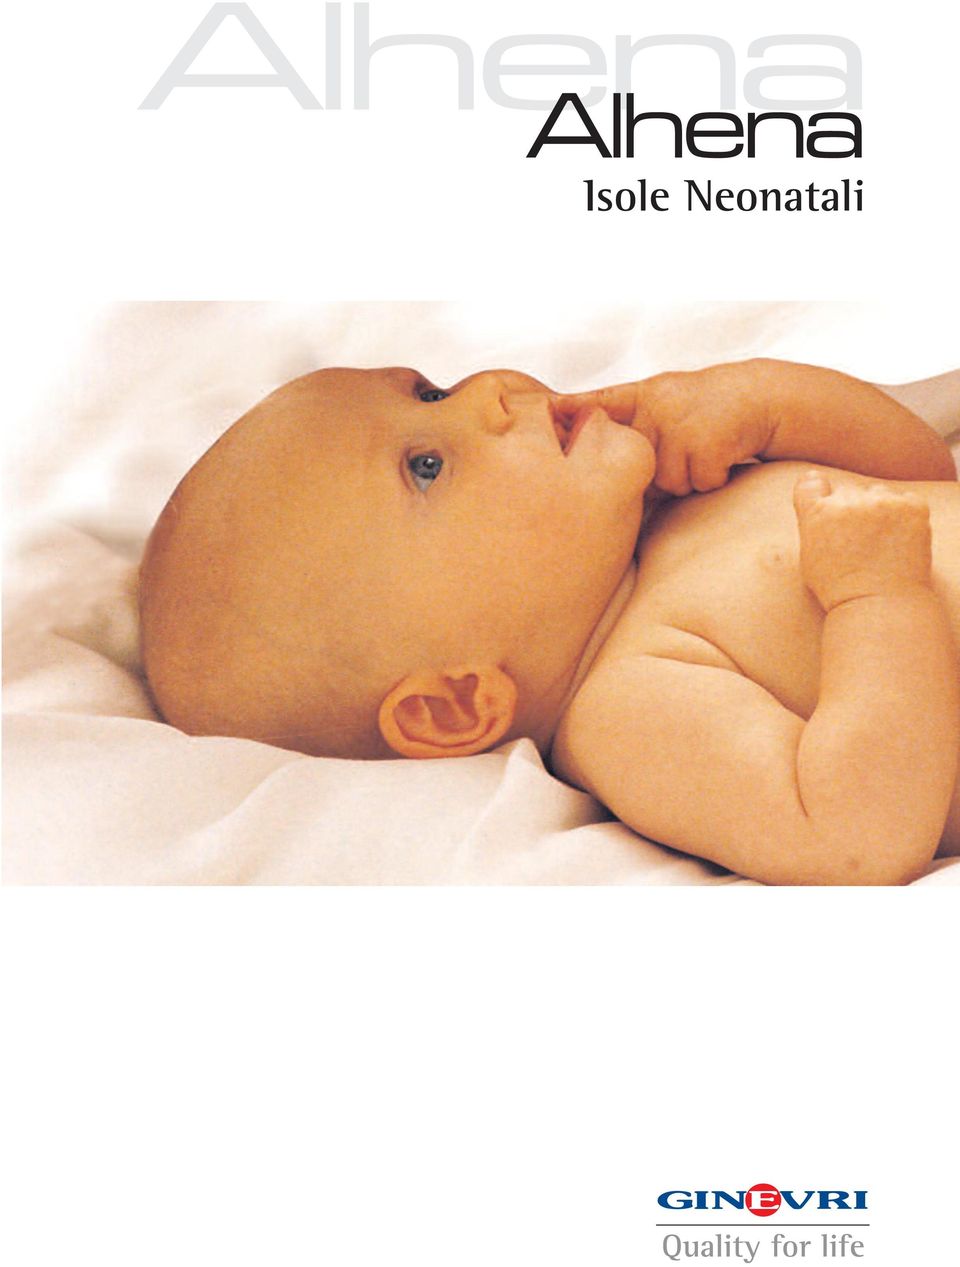 Neonatali